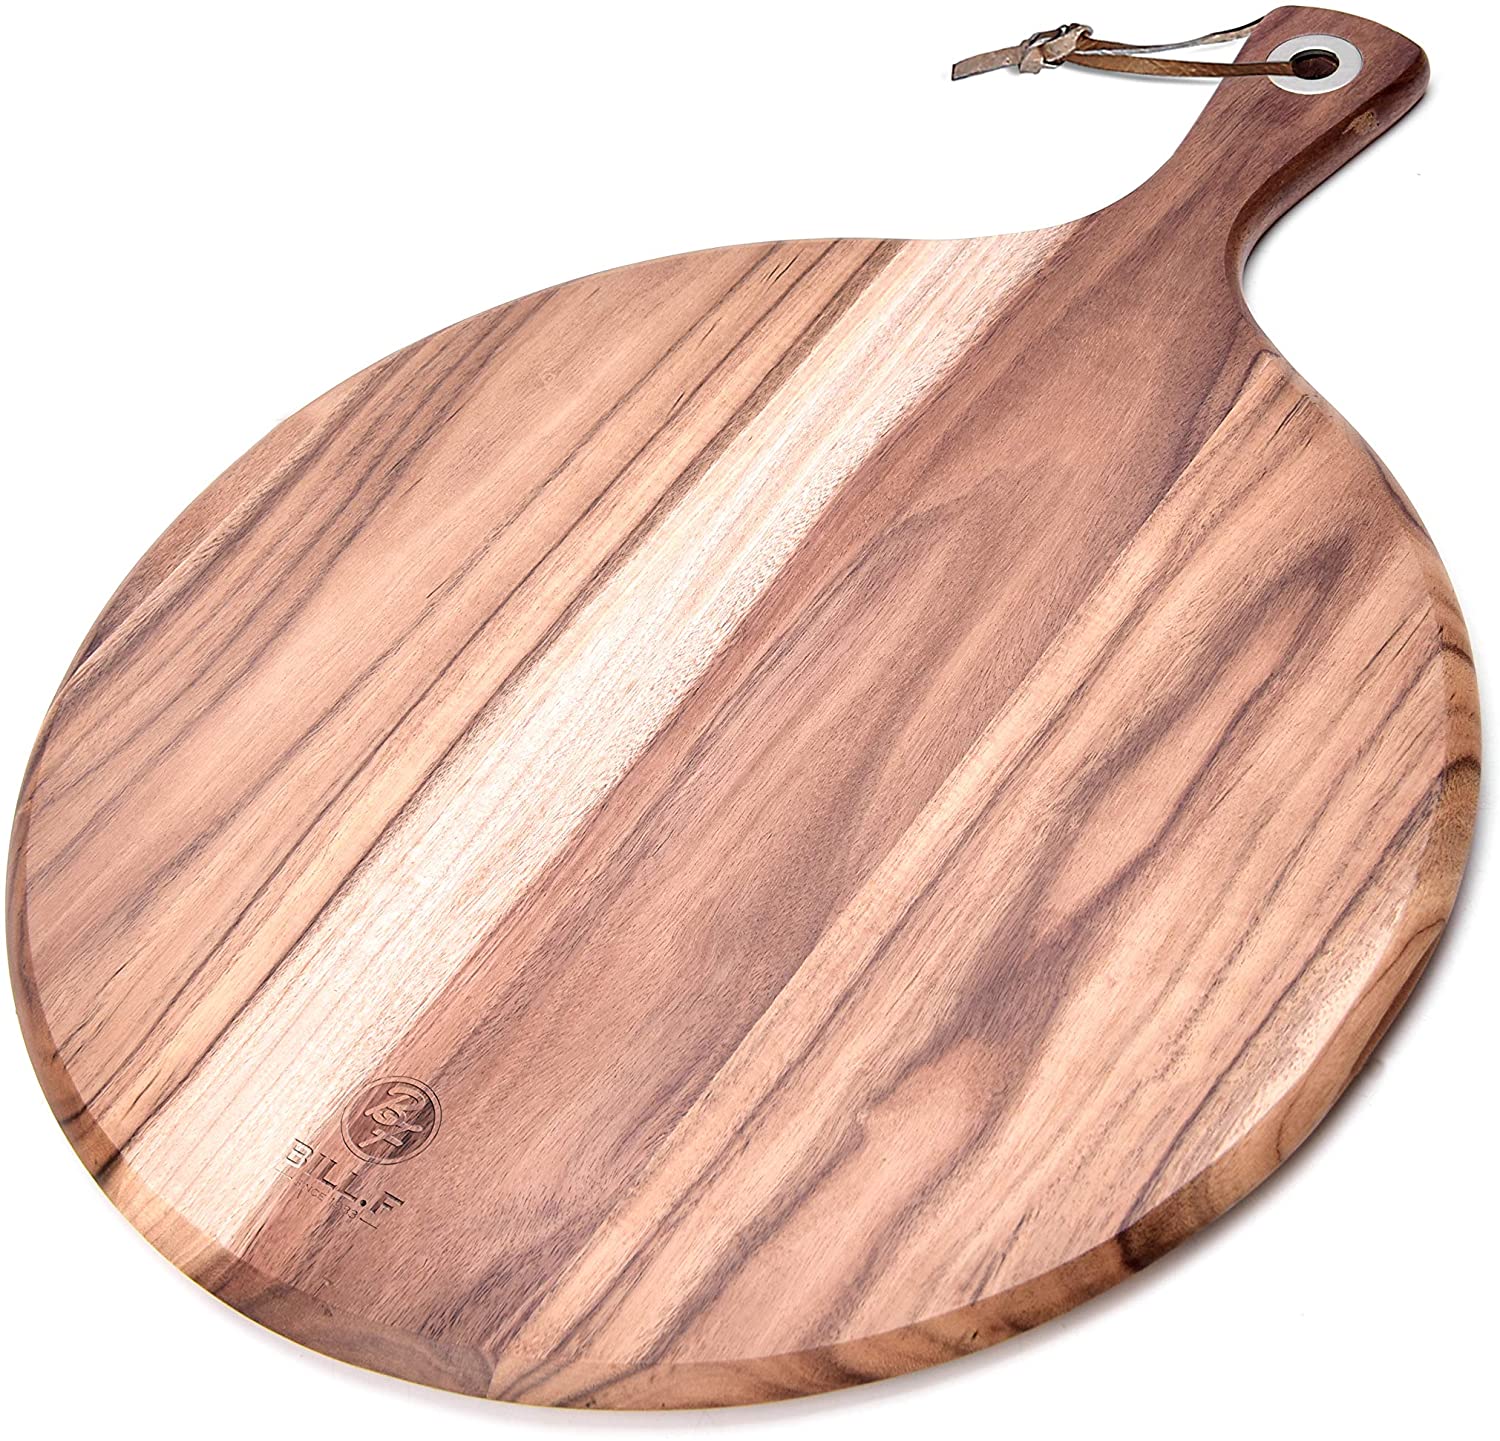 wood pizza round board